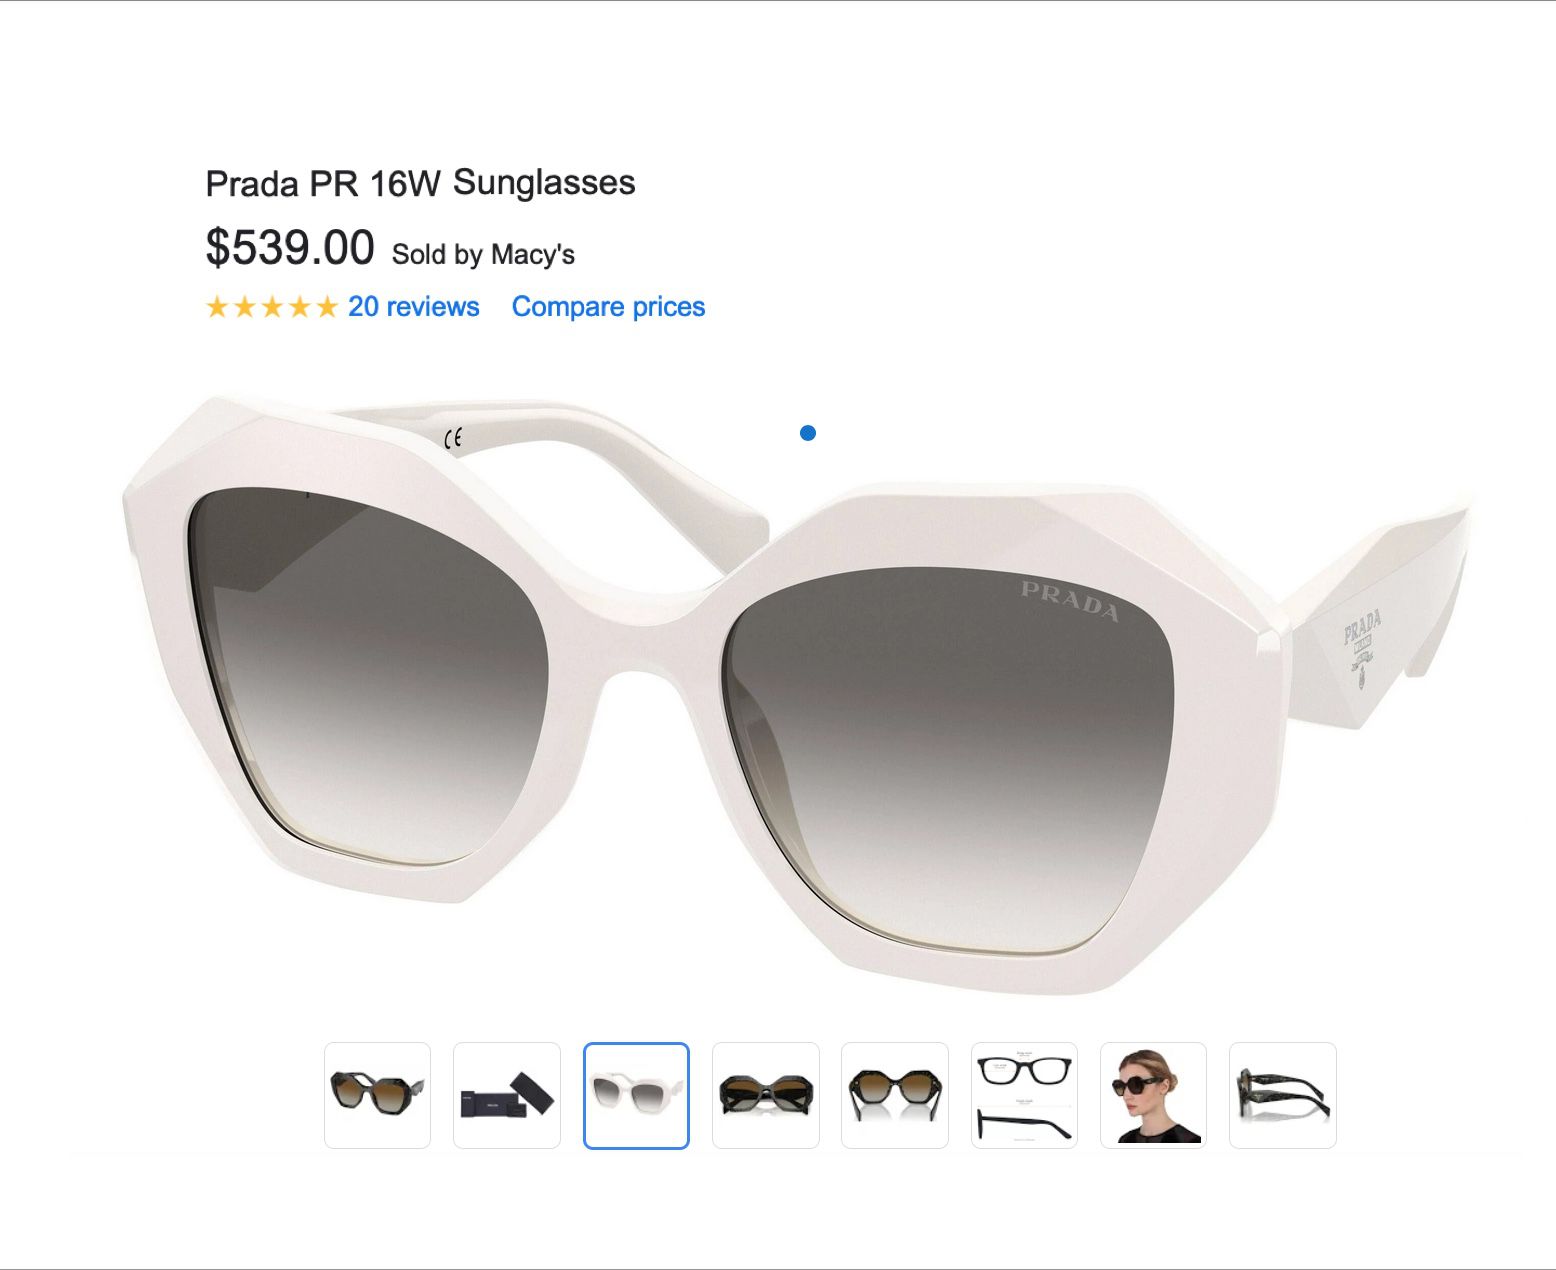 PRADA White Geometric Sunglasses 16ws Logo Authentic Great Condition $539 Retail